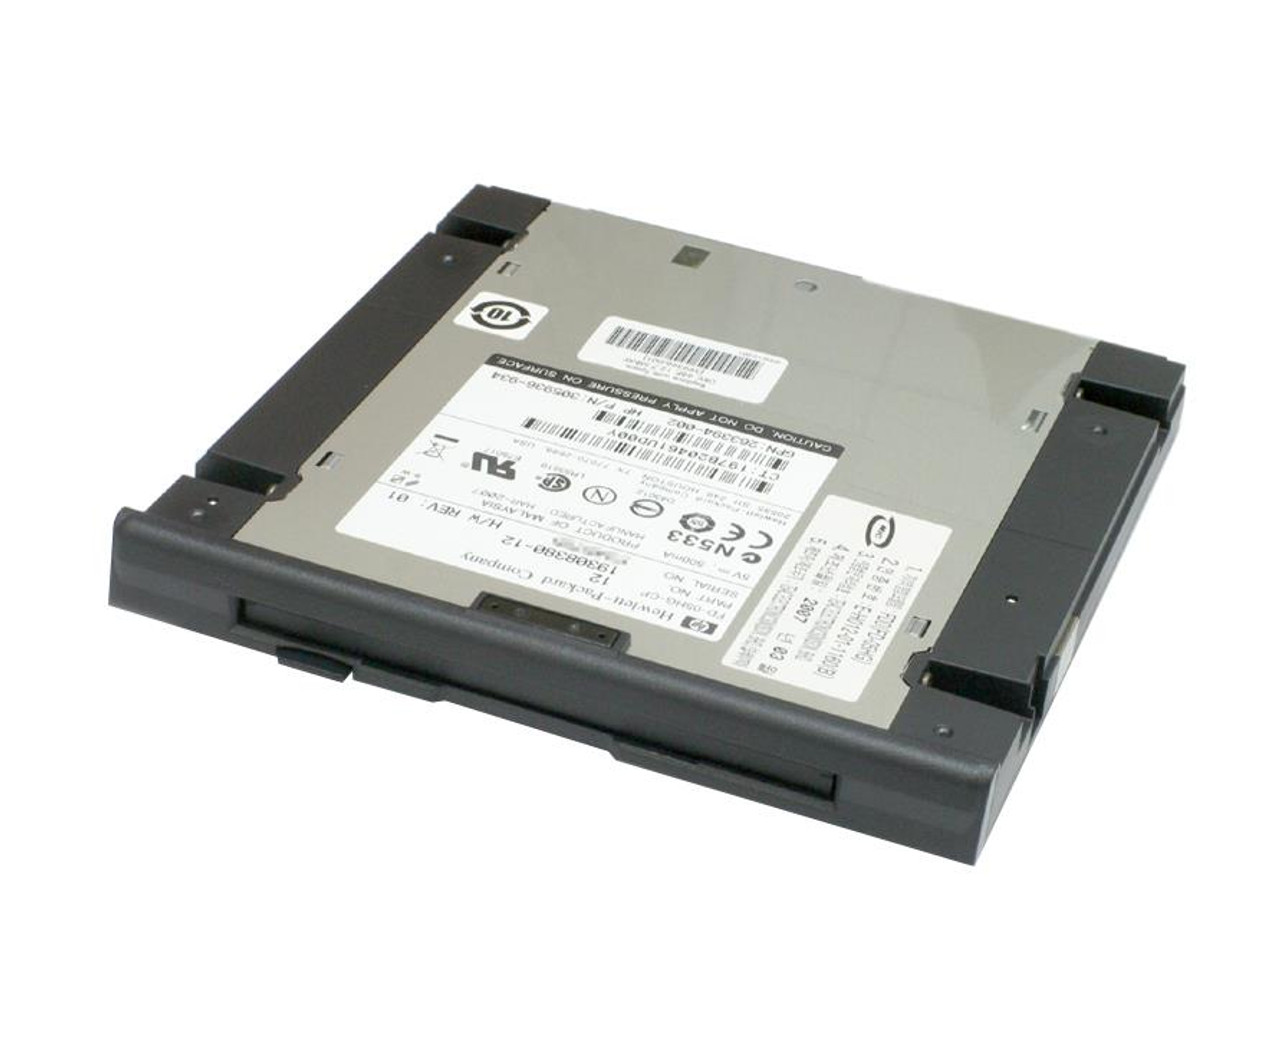 390164-B21-03 - HP 1.44MB Floppy Disk Drive for ProLiant DL360 G4p/DL580 G3 Server